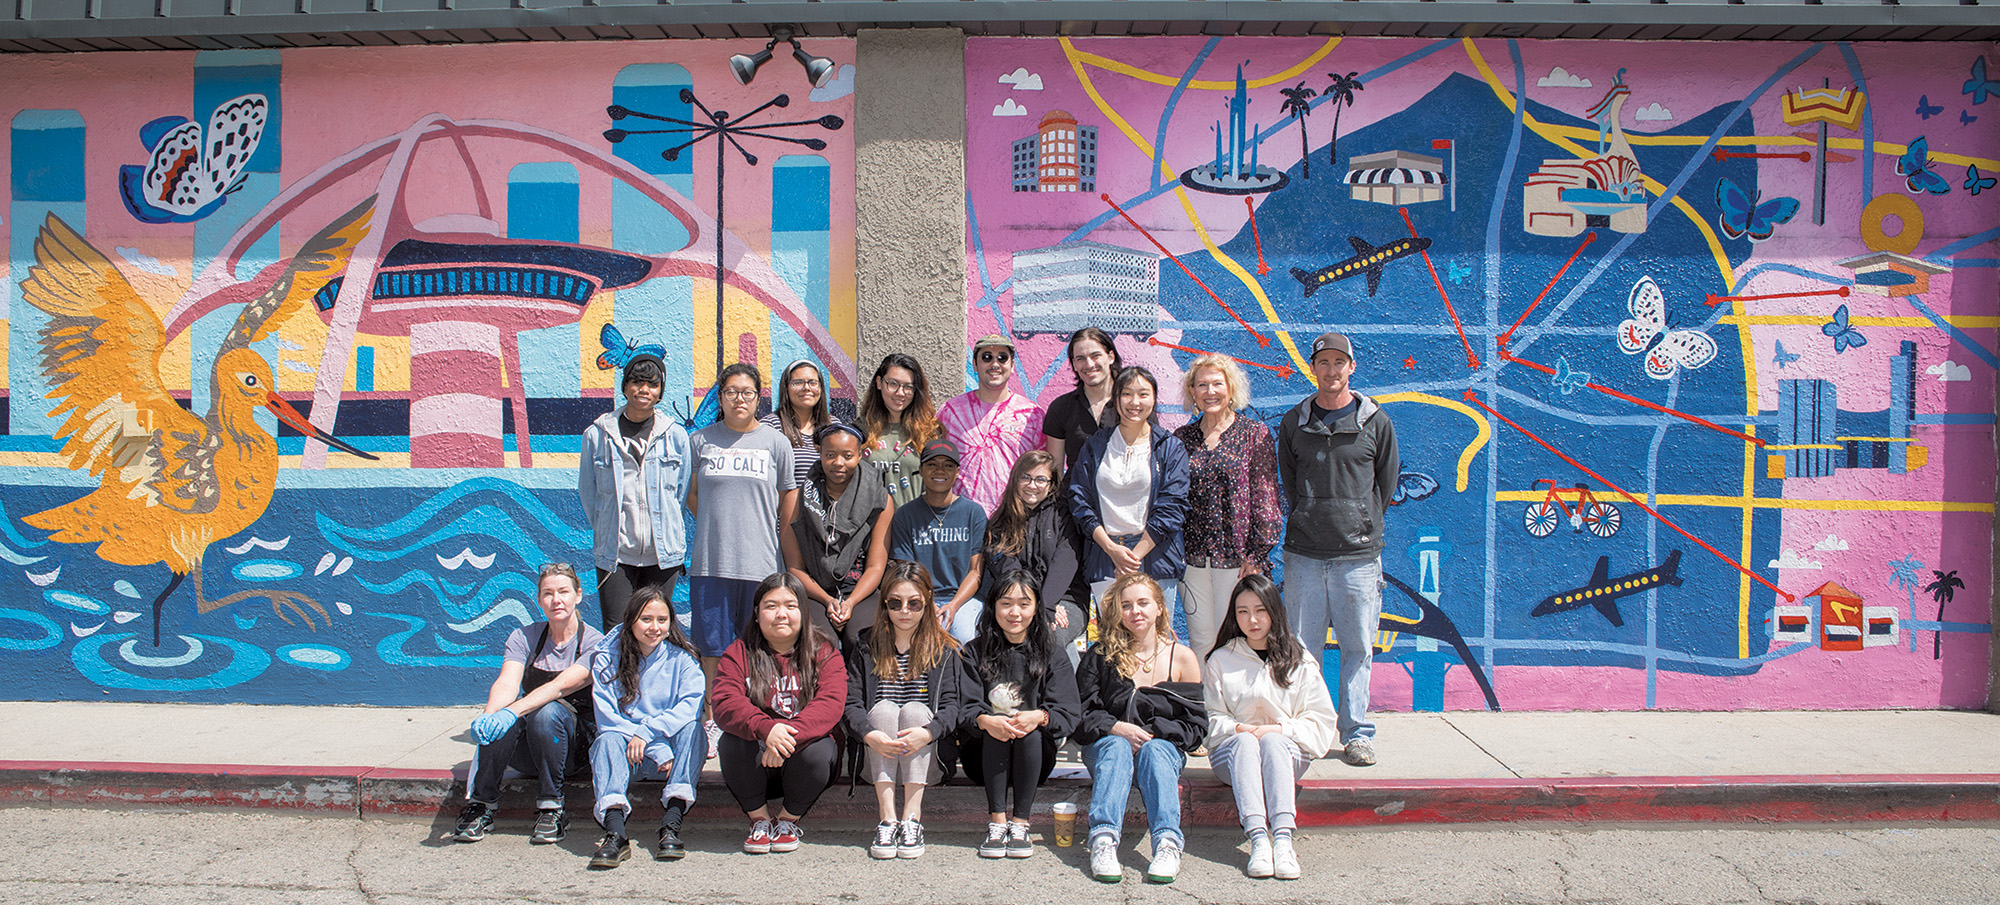 New murals bring life to Westchester alleyway